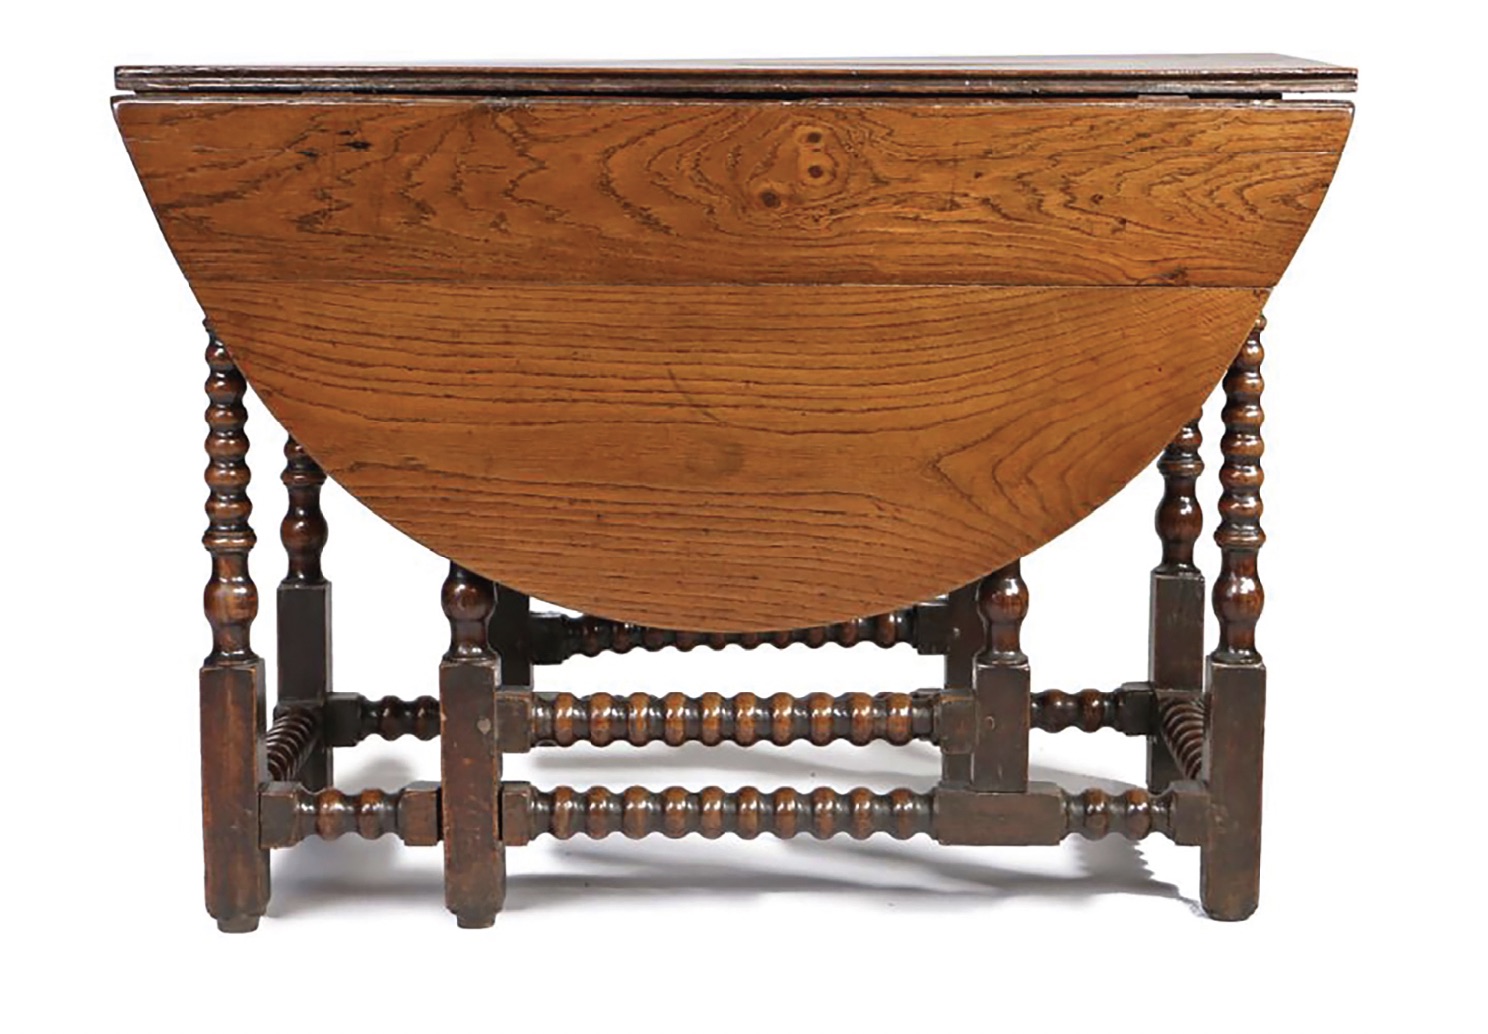 An early 18th-century oak gateleg table